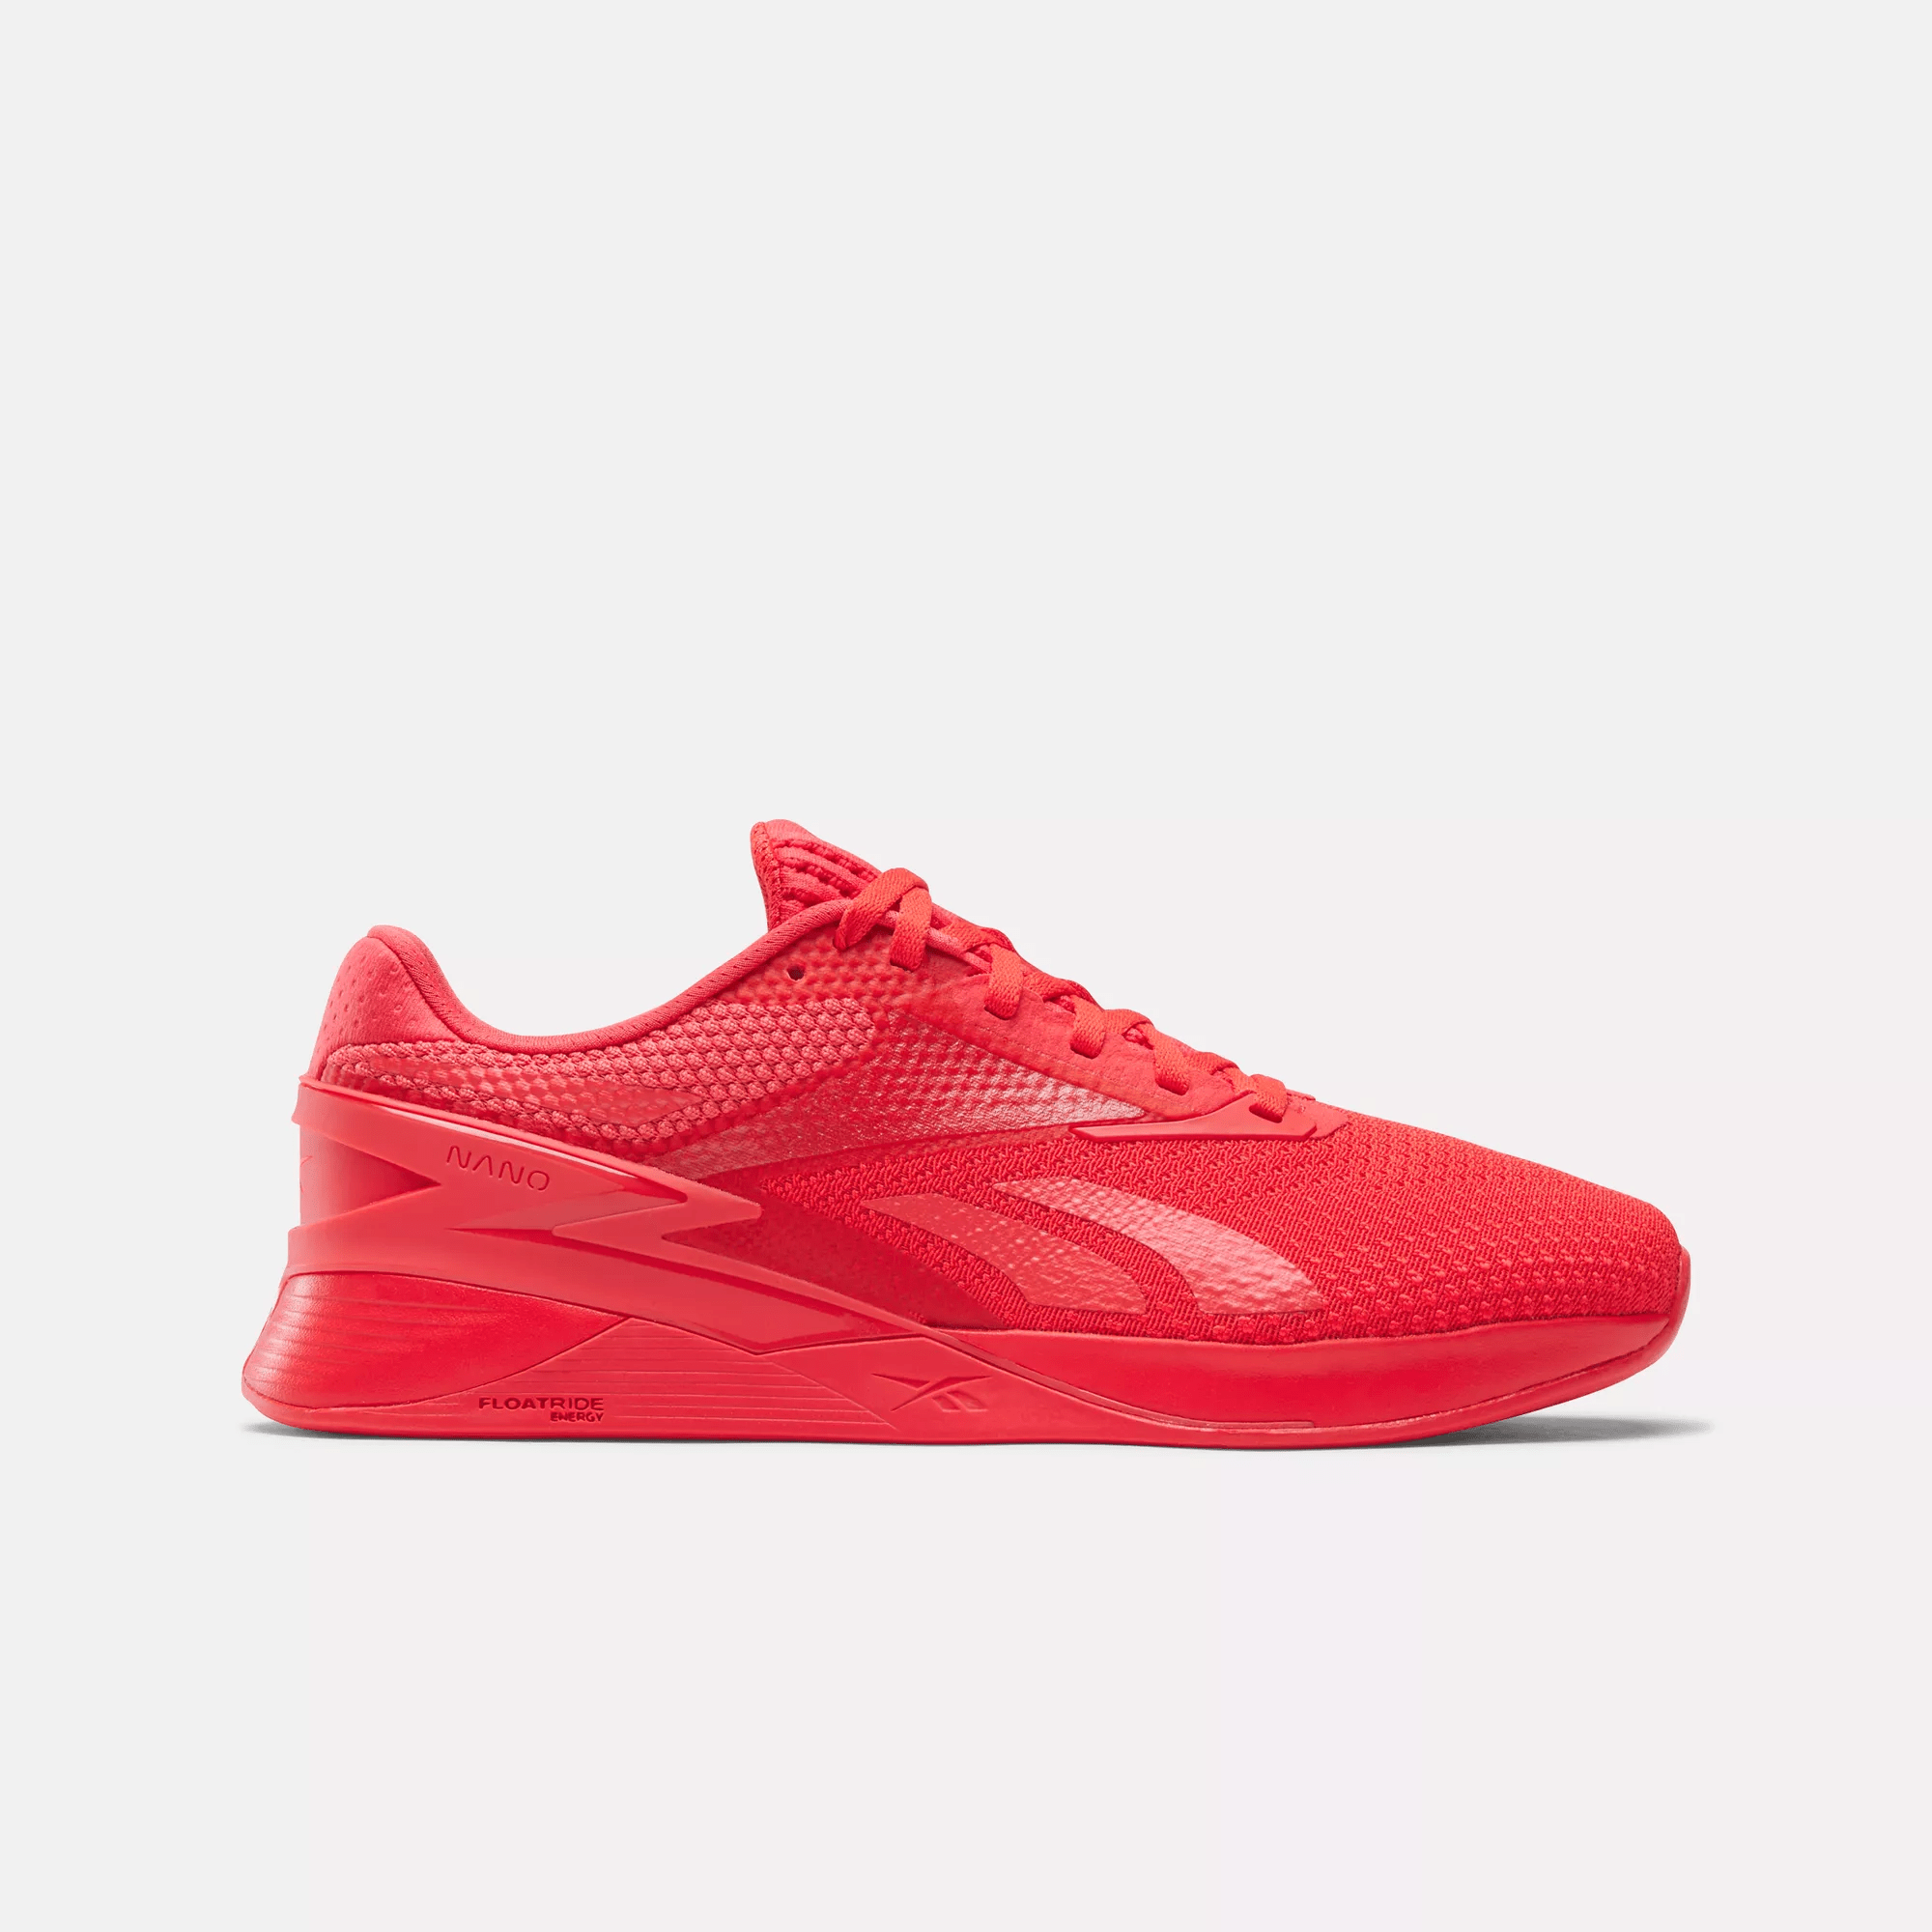 Reebok Nano X3 Shoes In Red